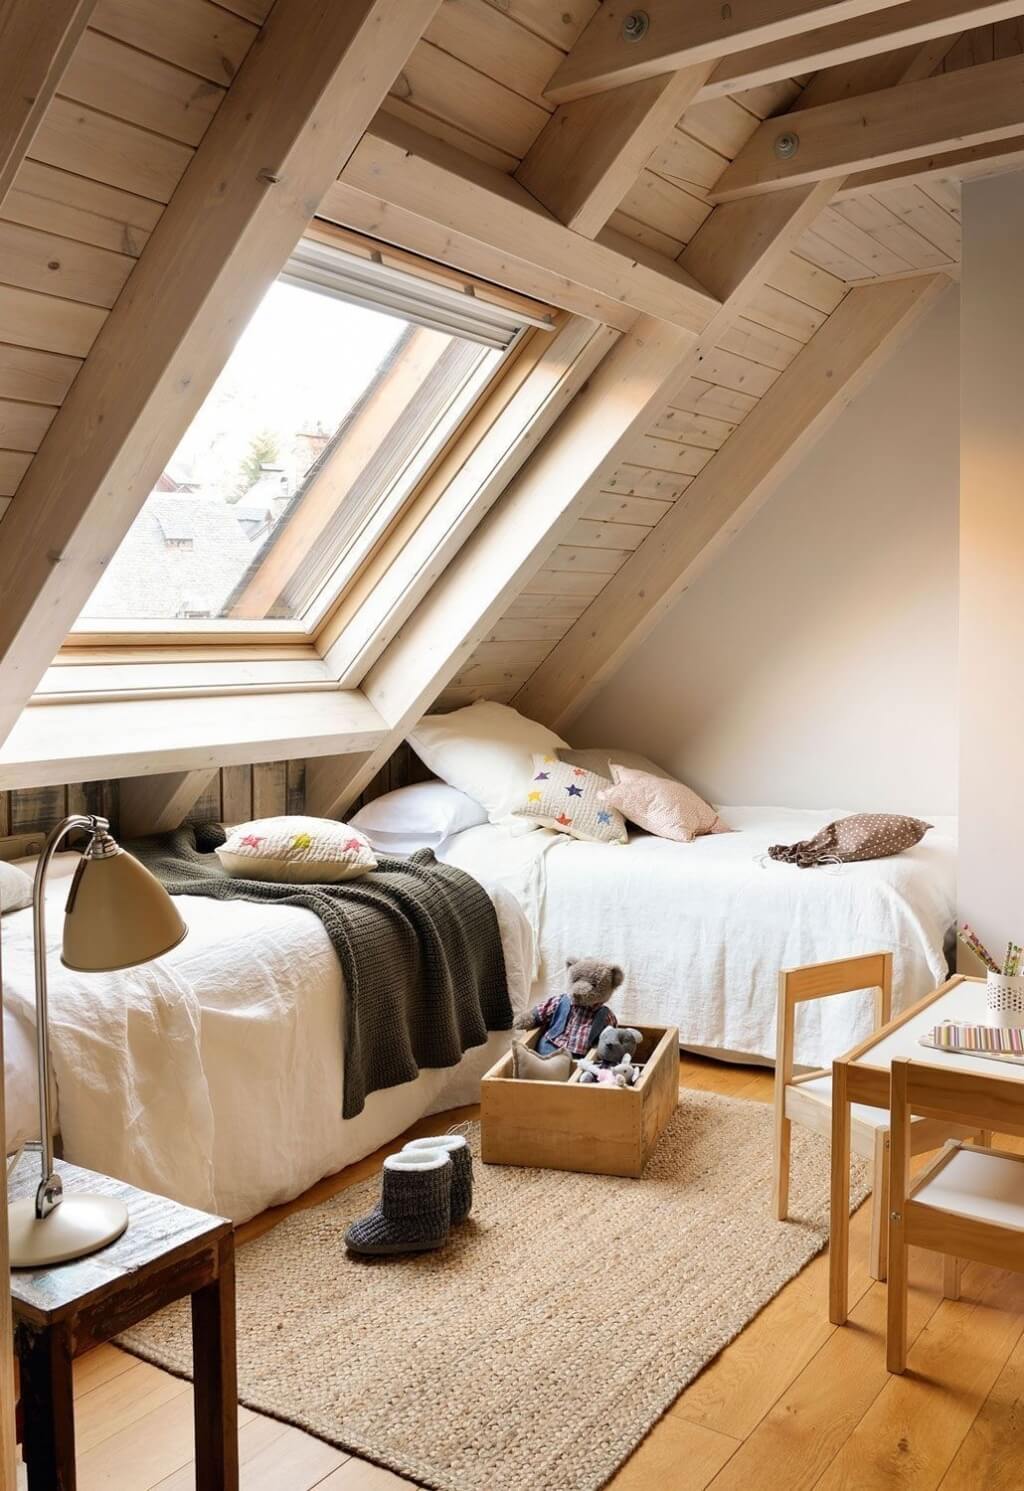 Nice bedroom in the attic